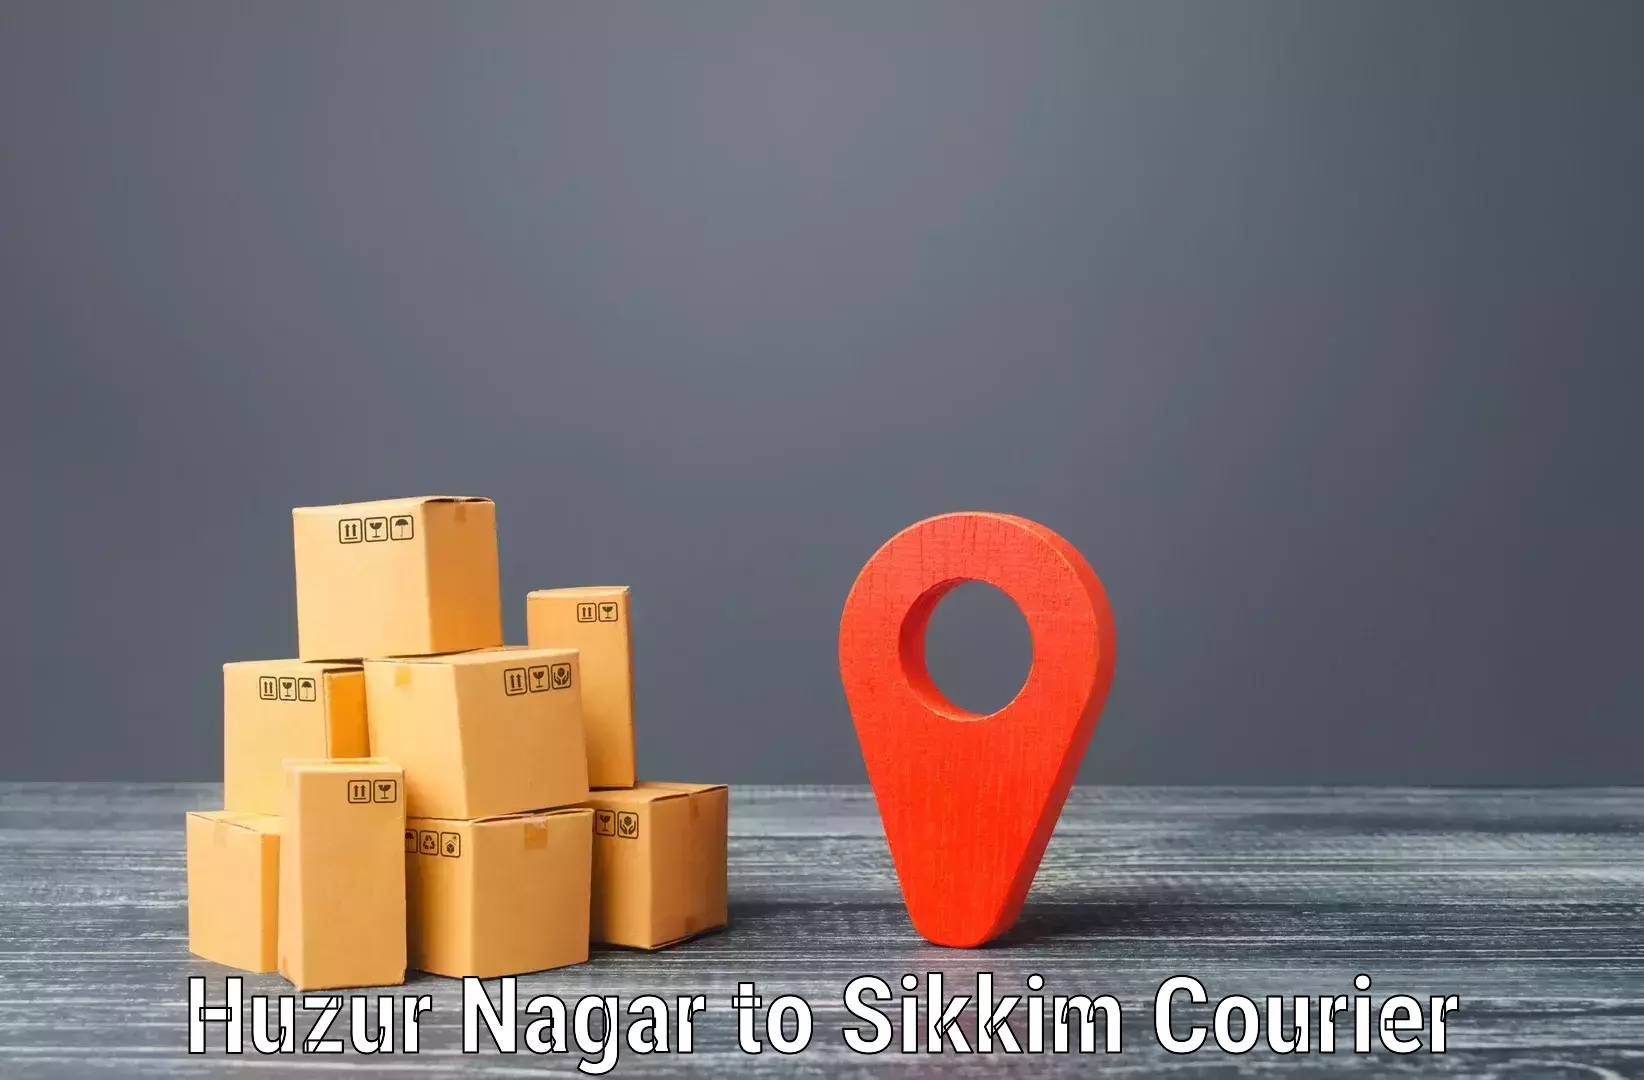 Cash on delivery service Huzur Nagar to Sikkim